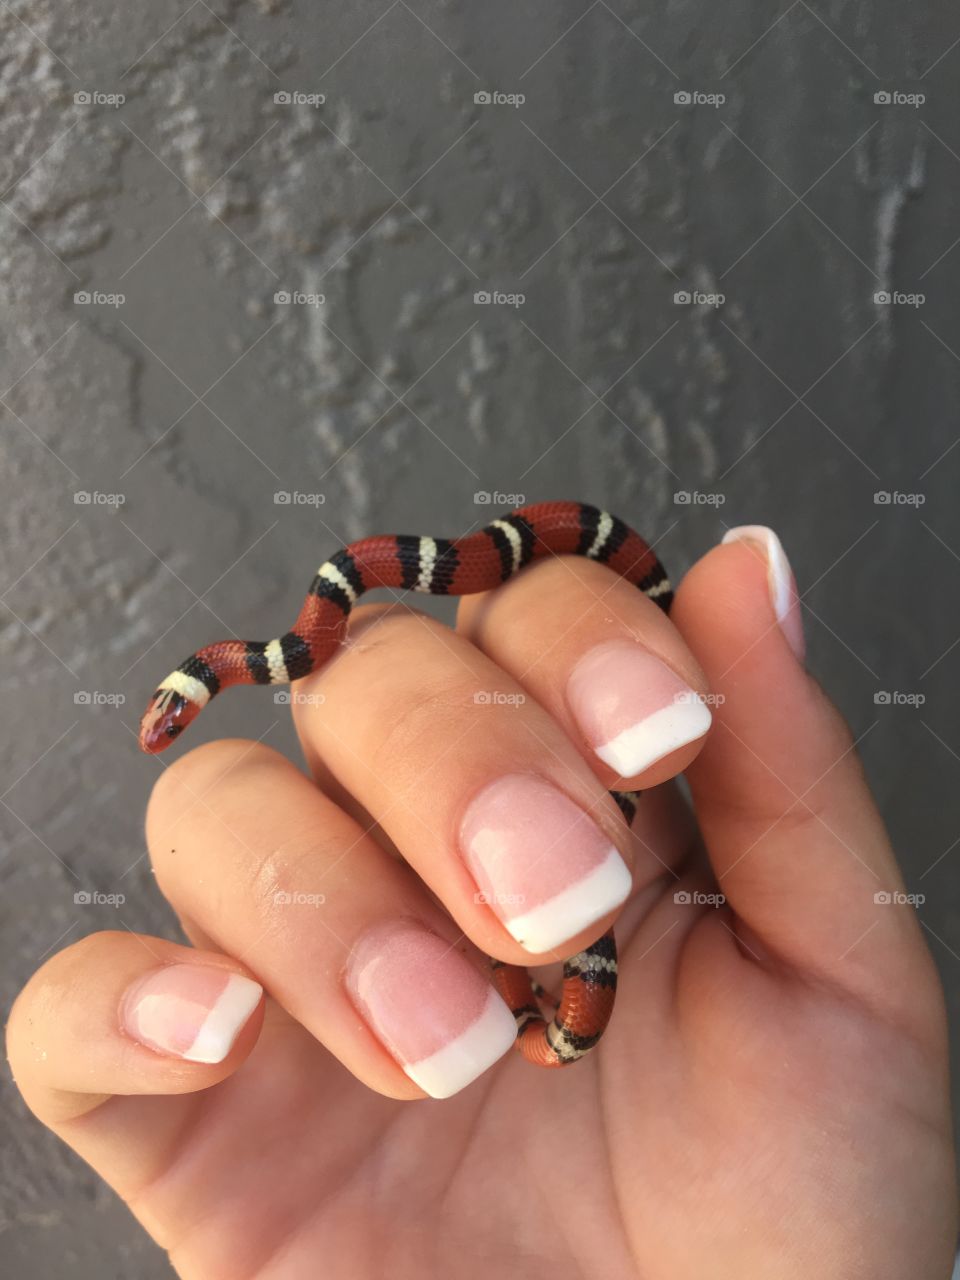 King snake, Florida wildlife, Florida snake, snake, colorful, black, red, yellow, stripes, baby snake